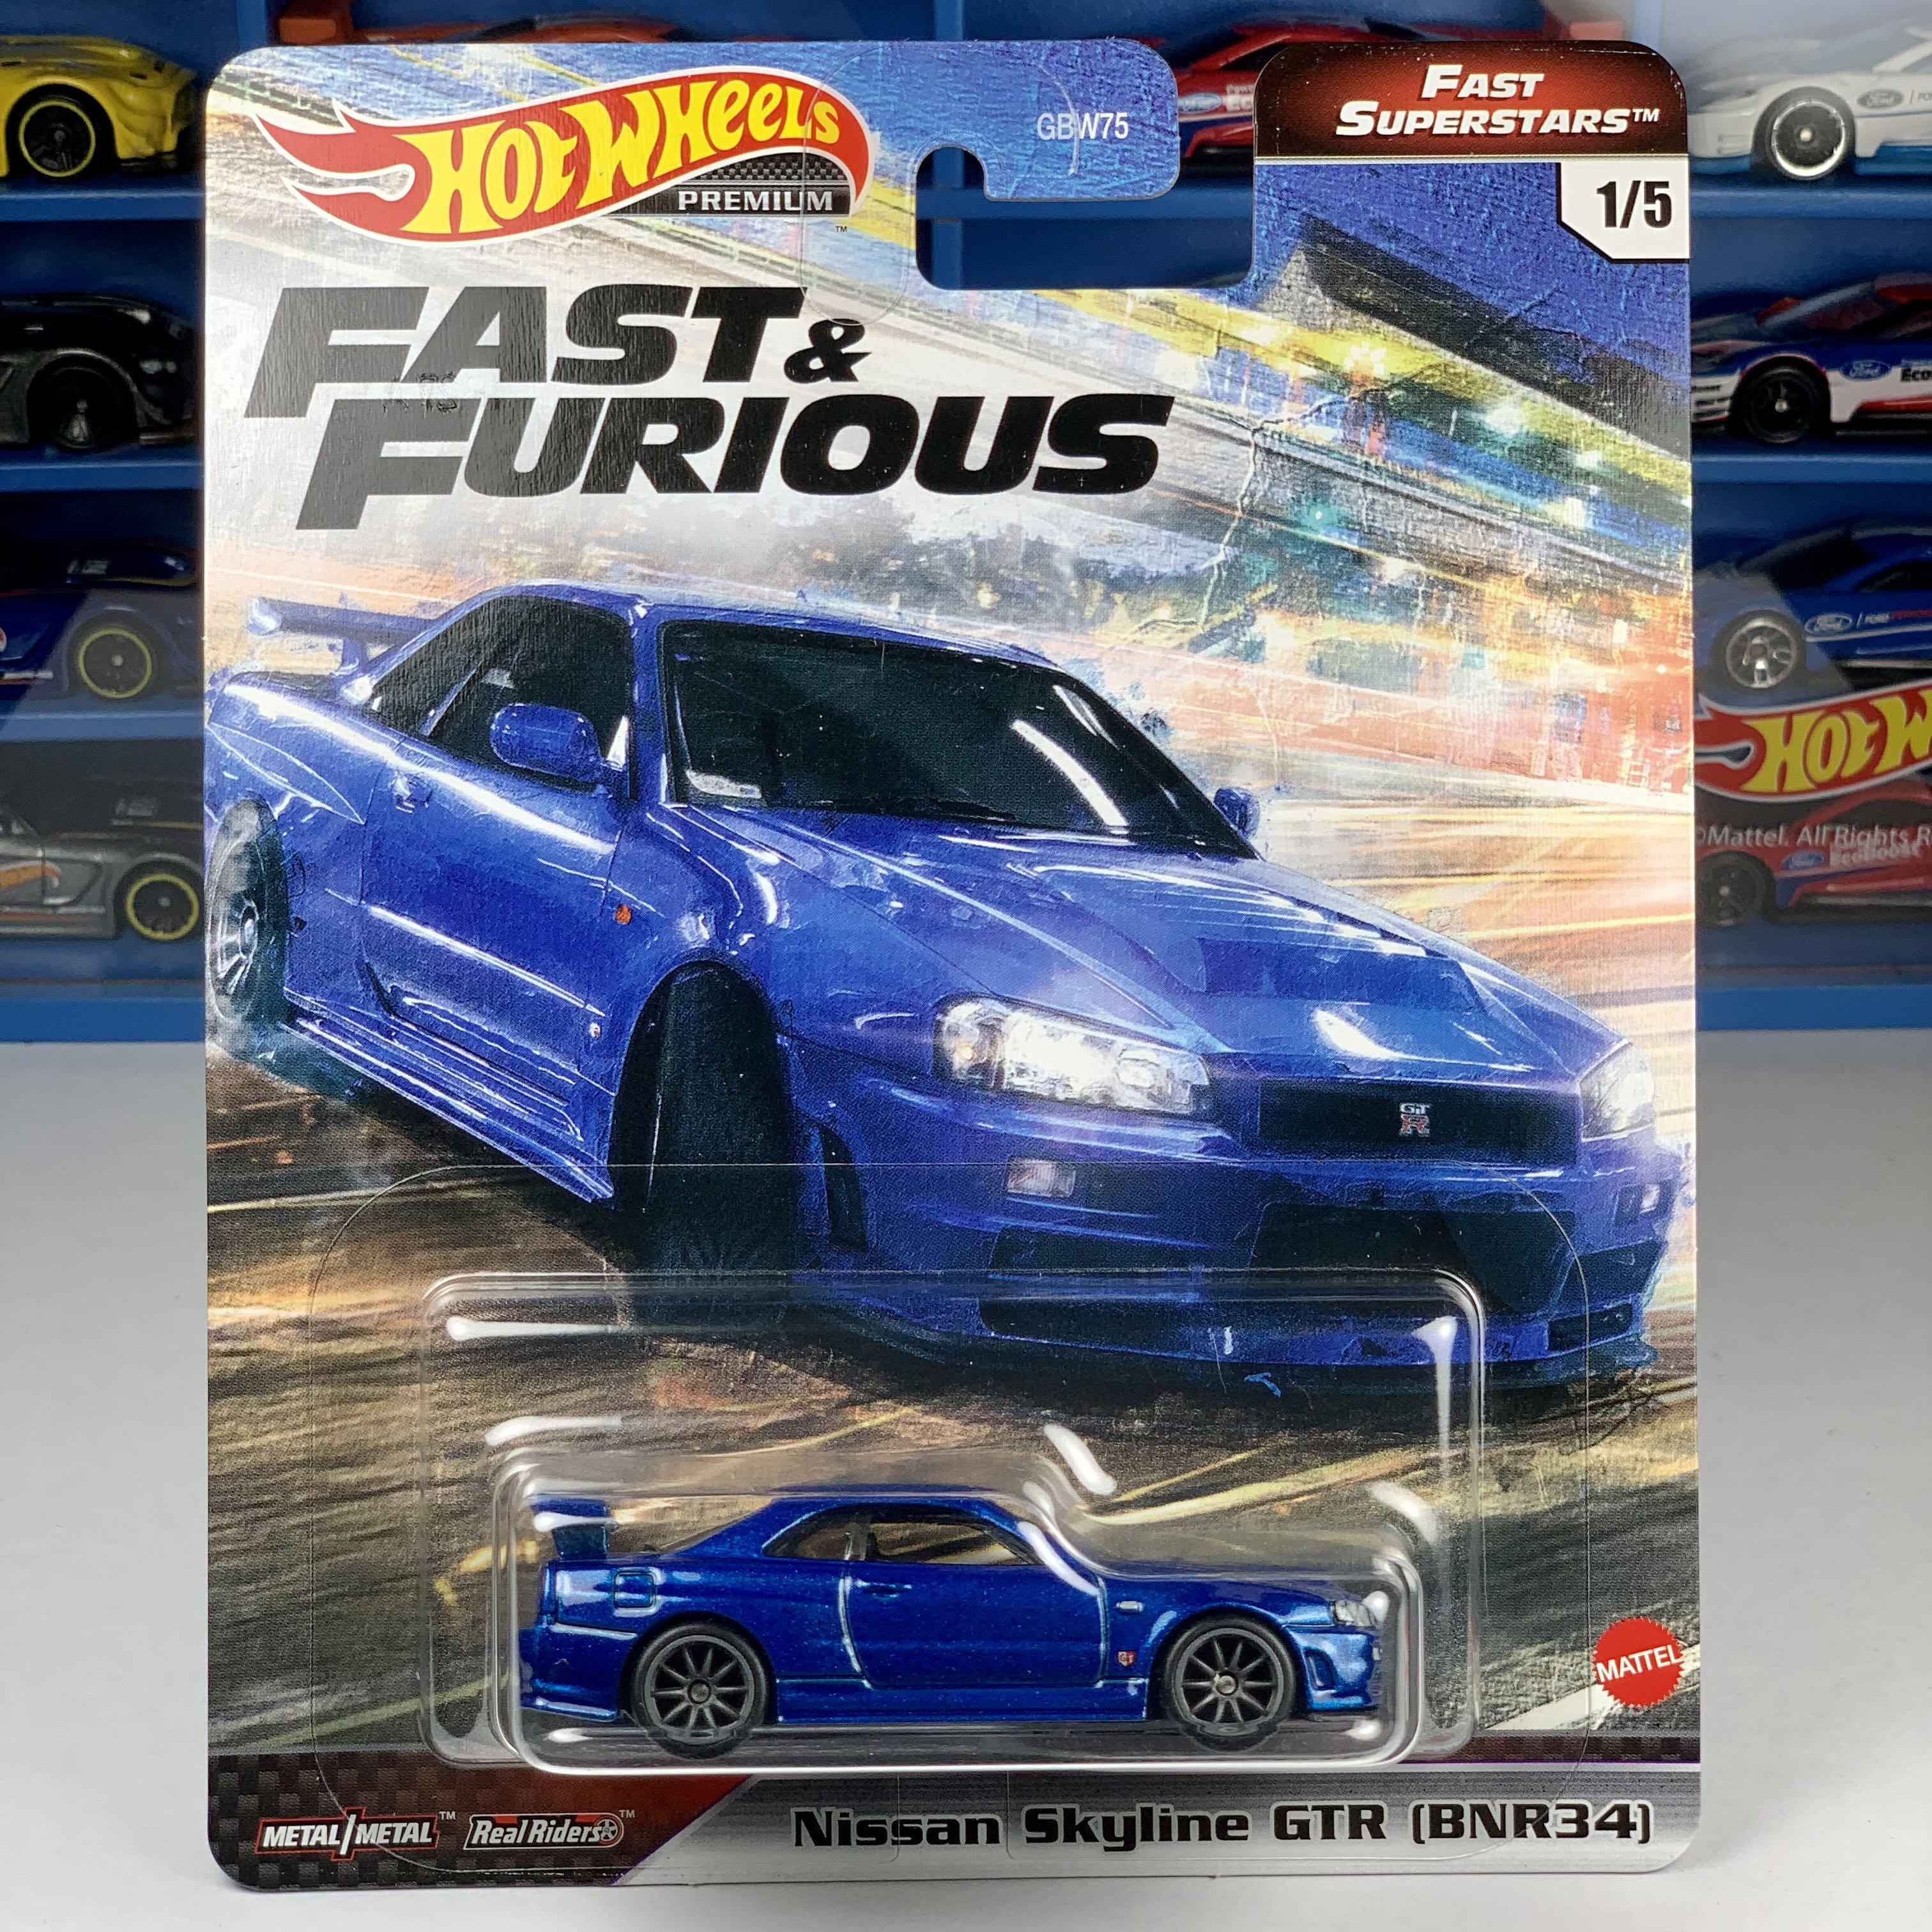 Hot Wheels Nissan Skyline GTR [BNR34] - Fast & Furious Fast Superstars,  Hobbies & Toys, Toys & Games on Carousell